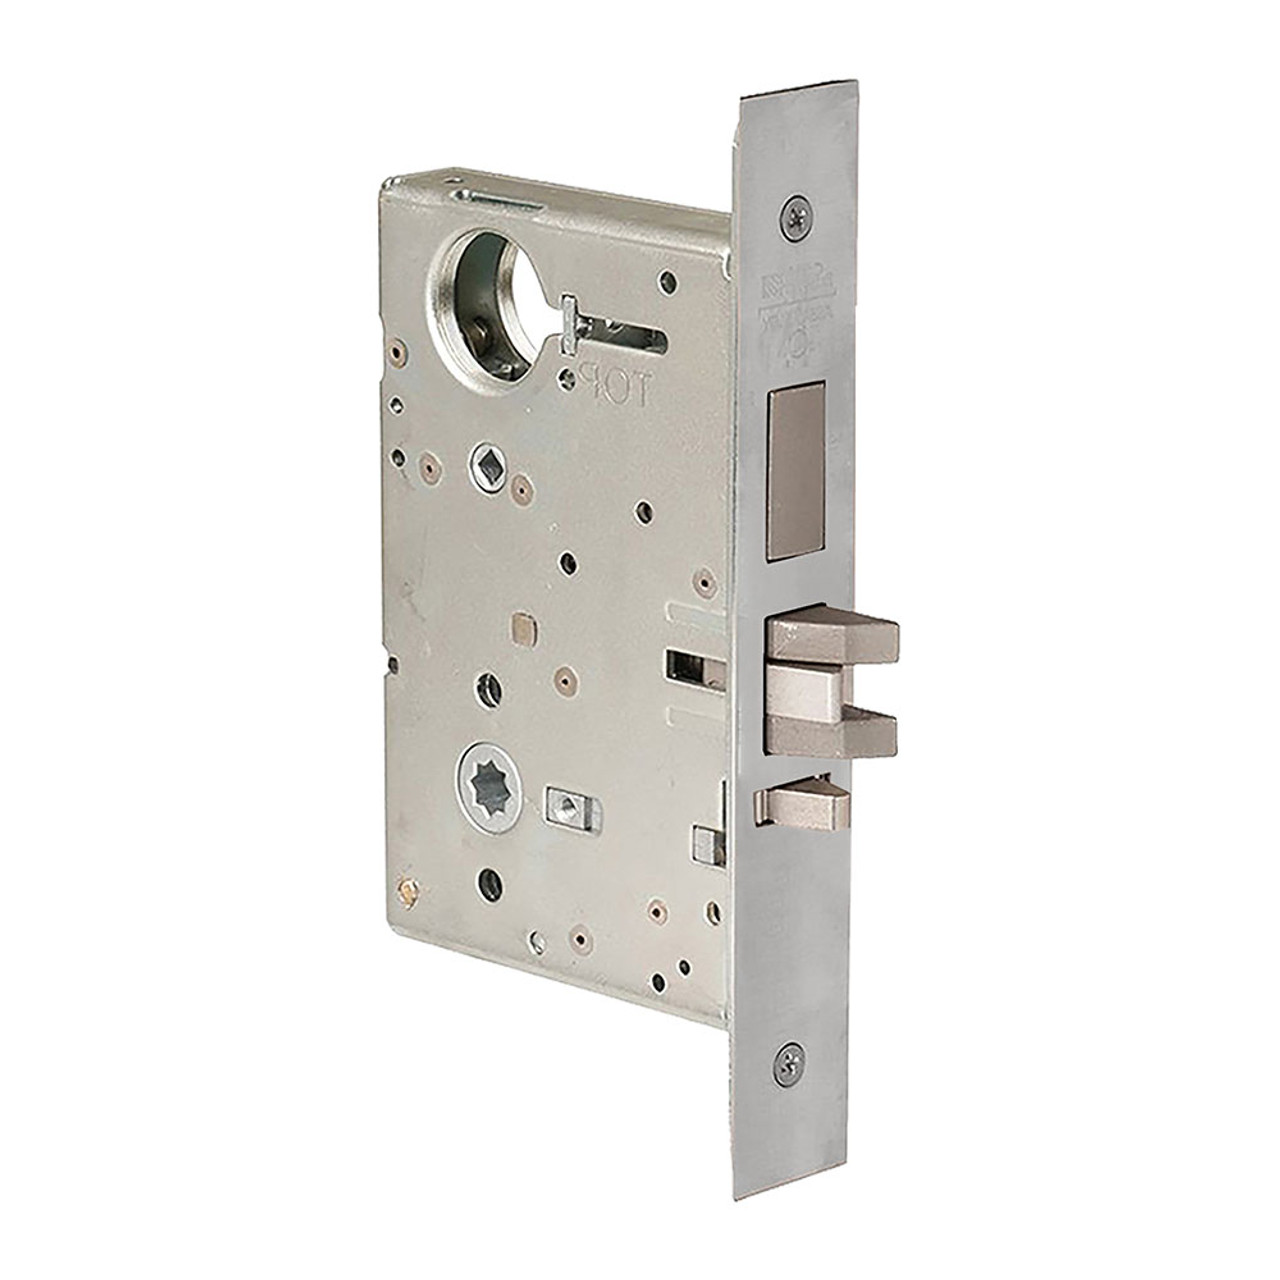 Corbin Russwin ML2059 Heavy Duty Mortise Lockset, Lockbody Only, Security Storeroom/Closet Function